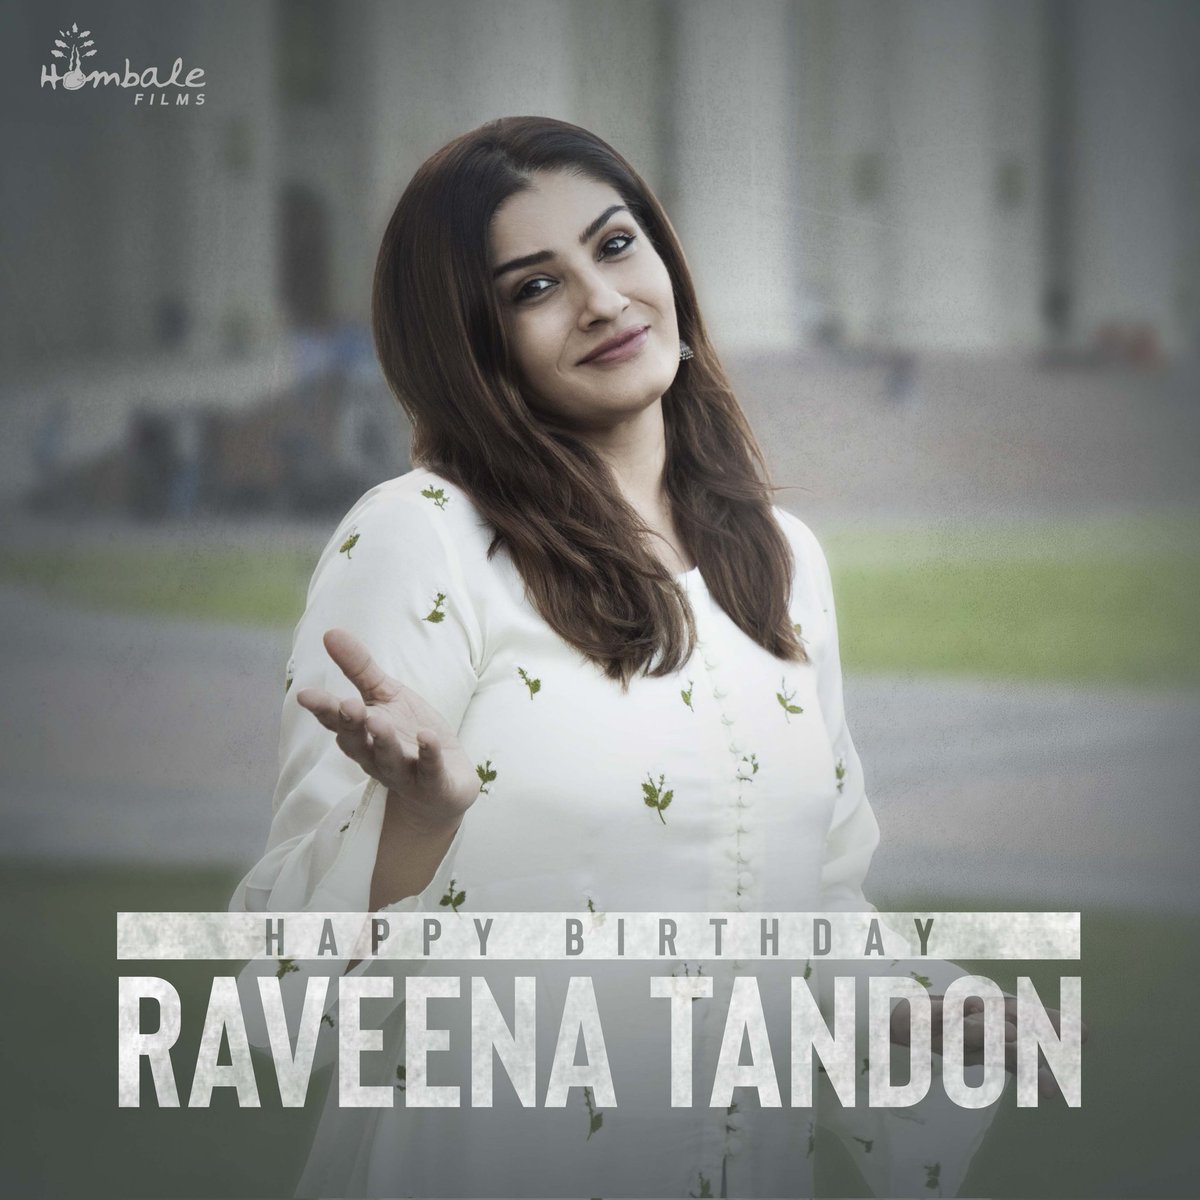 Birth Day Wishes To Our ' Ramika Sen ' 

#RaveenaTandon @TandonRaveena
#HBDRaveenaTandon #KGFChapter3 
#HappyBirthDayRaveenaTandon